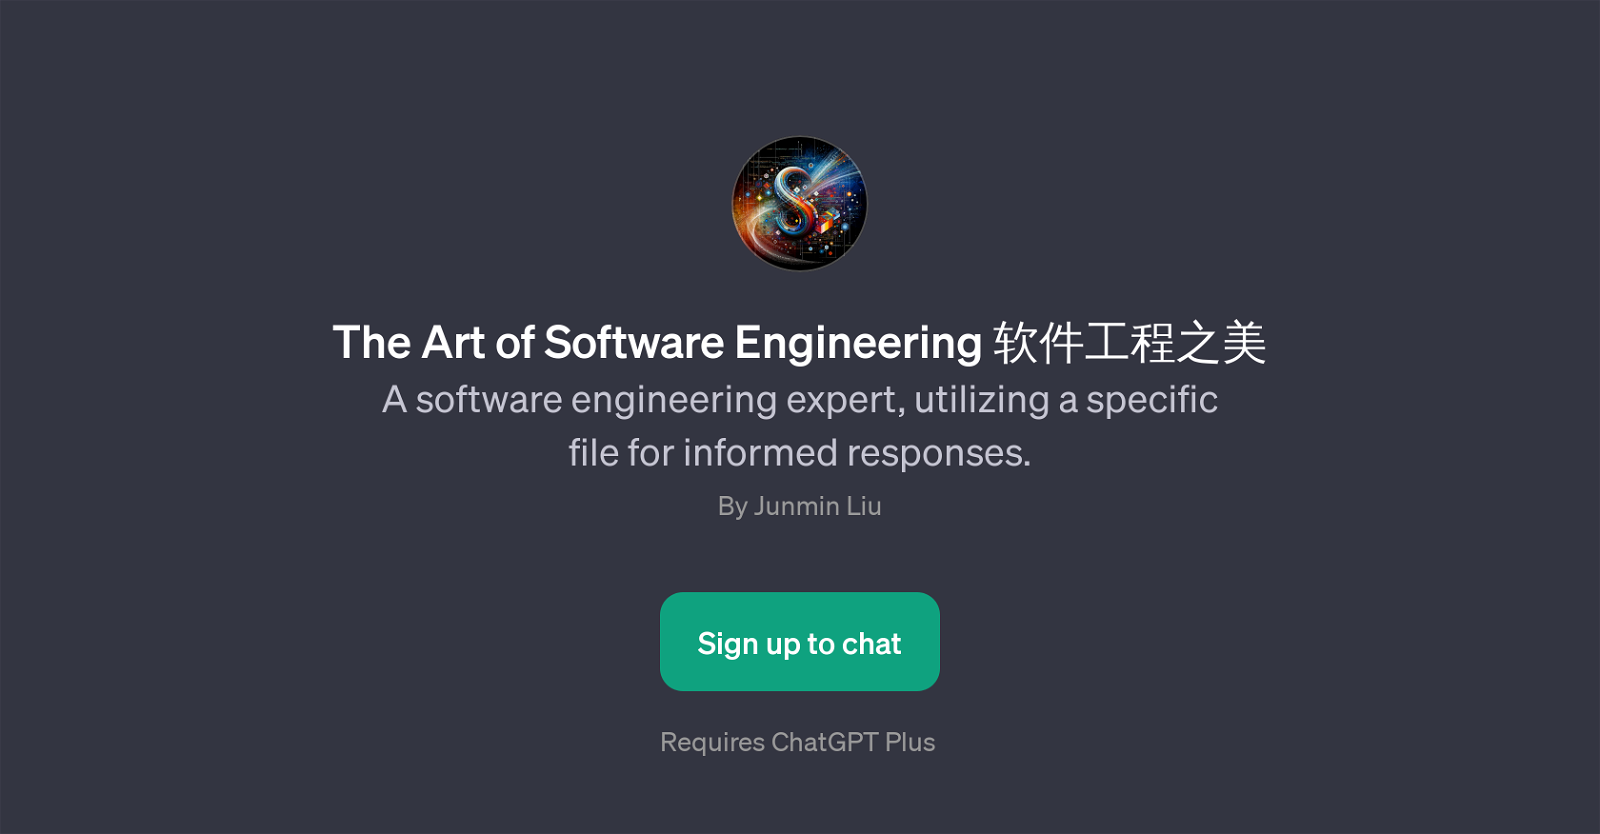 The Art of Software Engineering website